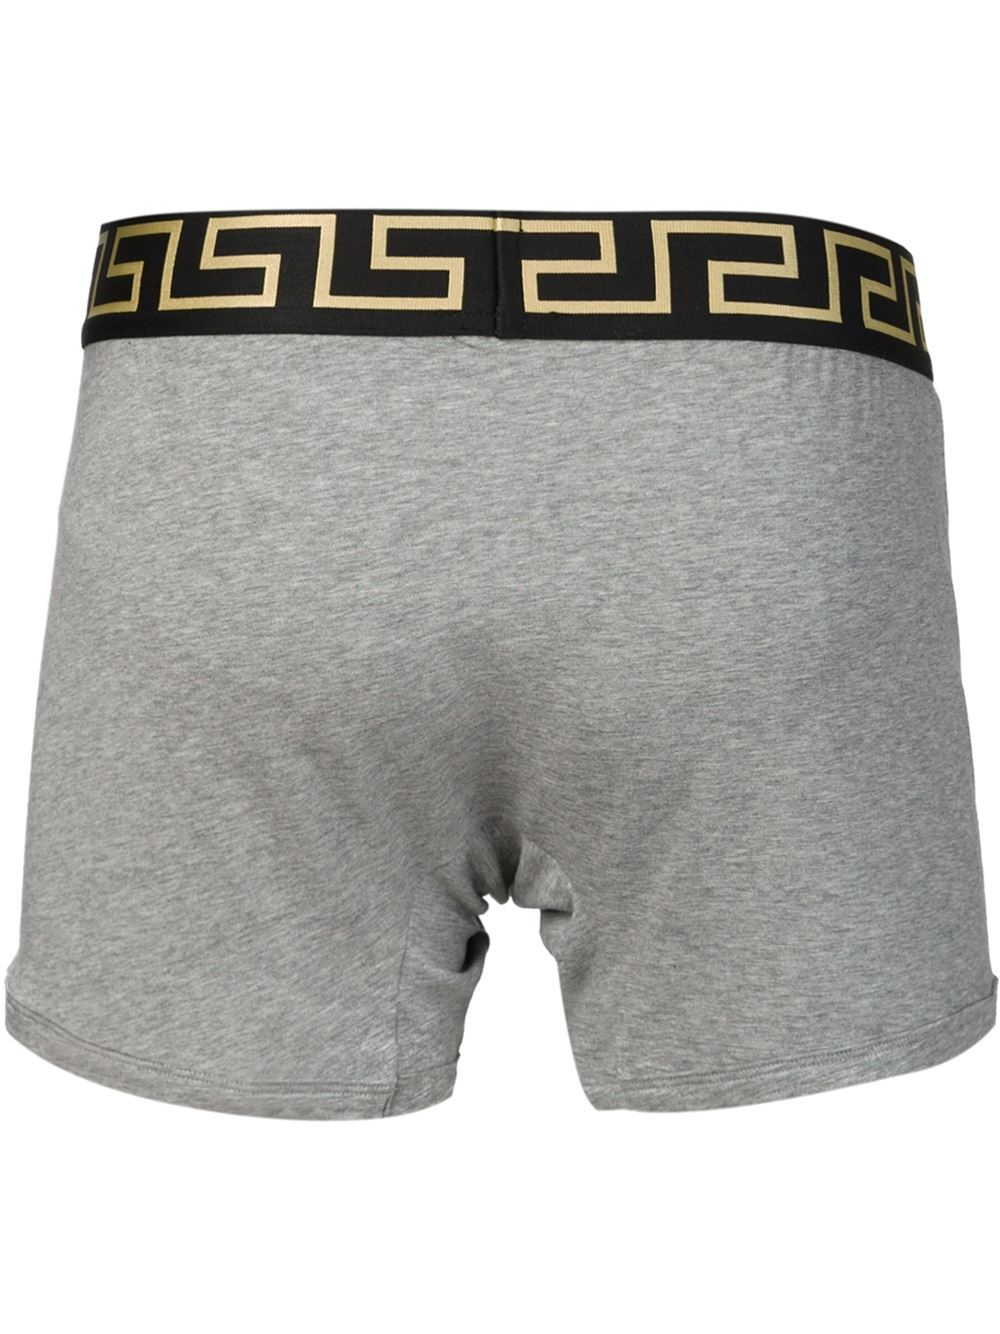 Versace Cotton 'greca' Boxer Shorts in Grey (Gray) for Men - Lyst